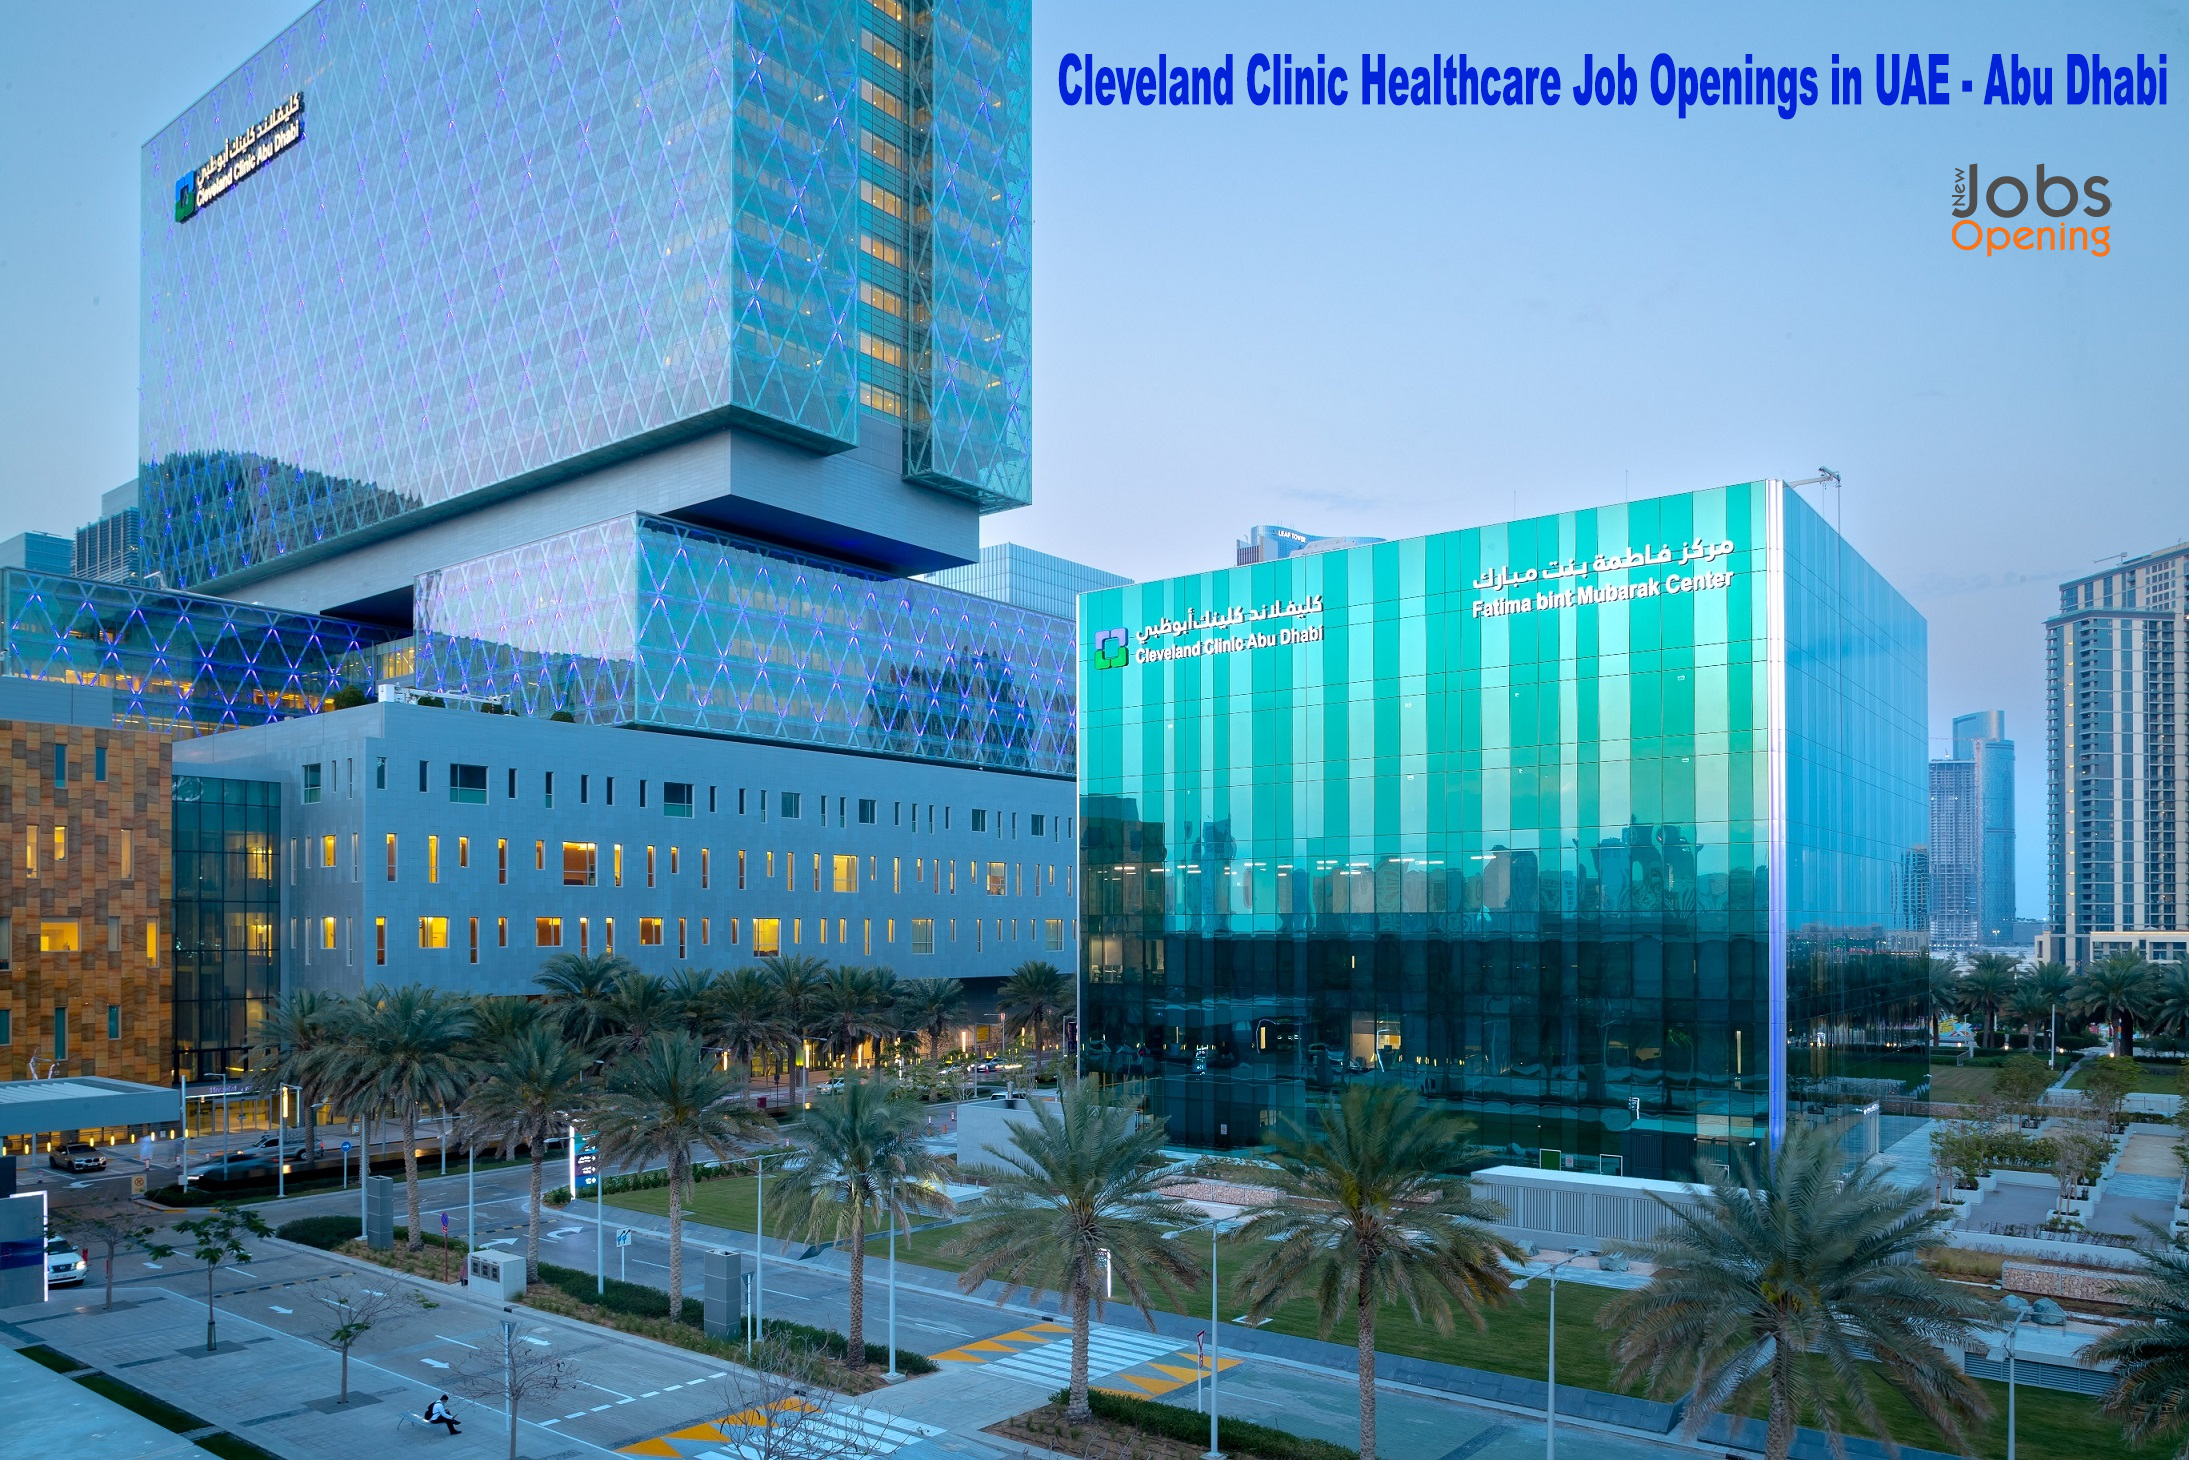 Cleveland Clinic Healthcare Job Openings in UAE - Abu Dhabi